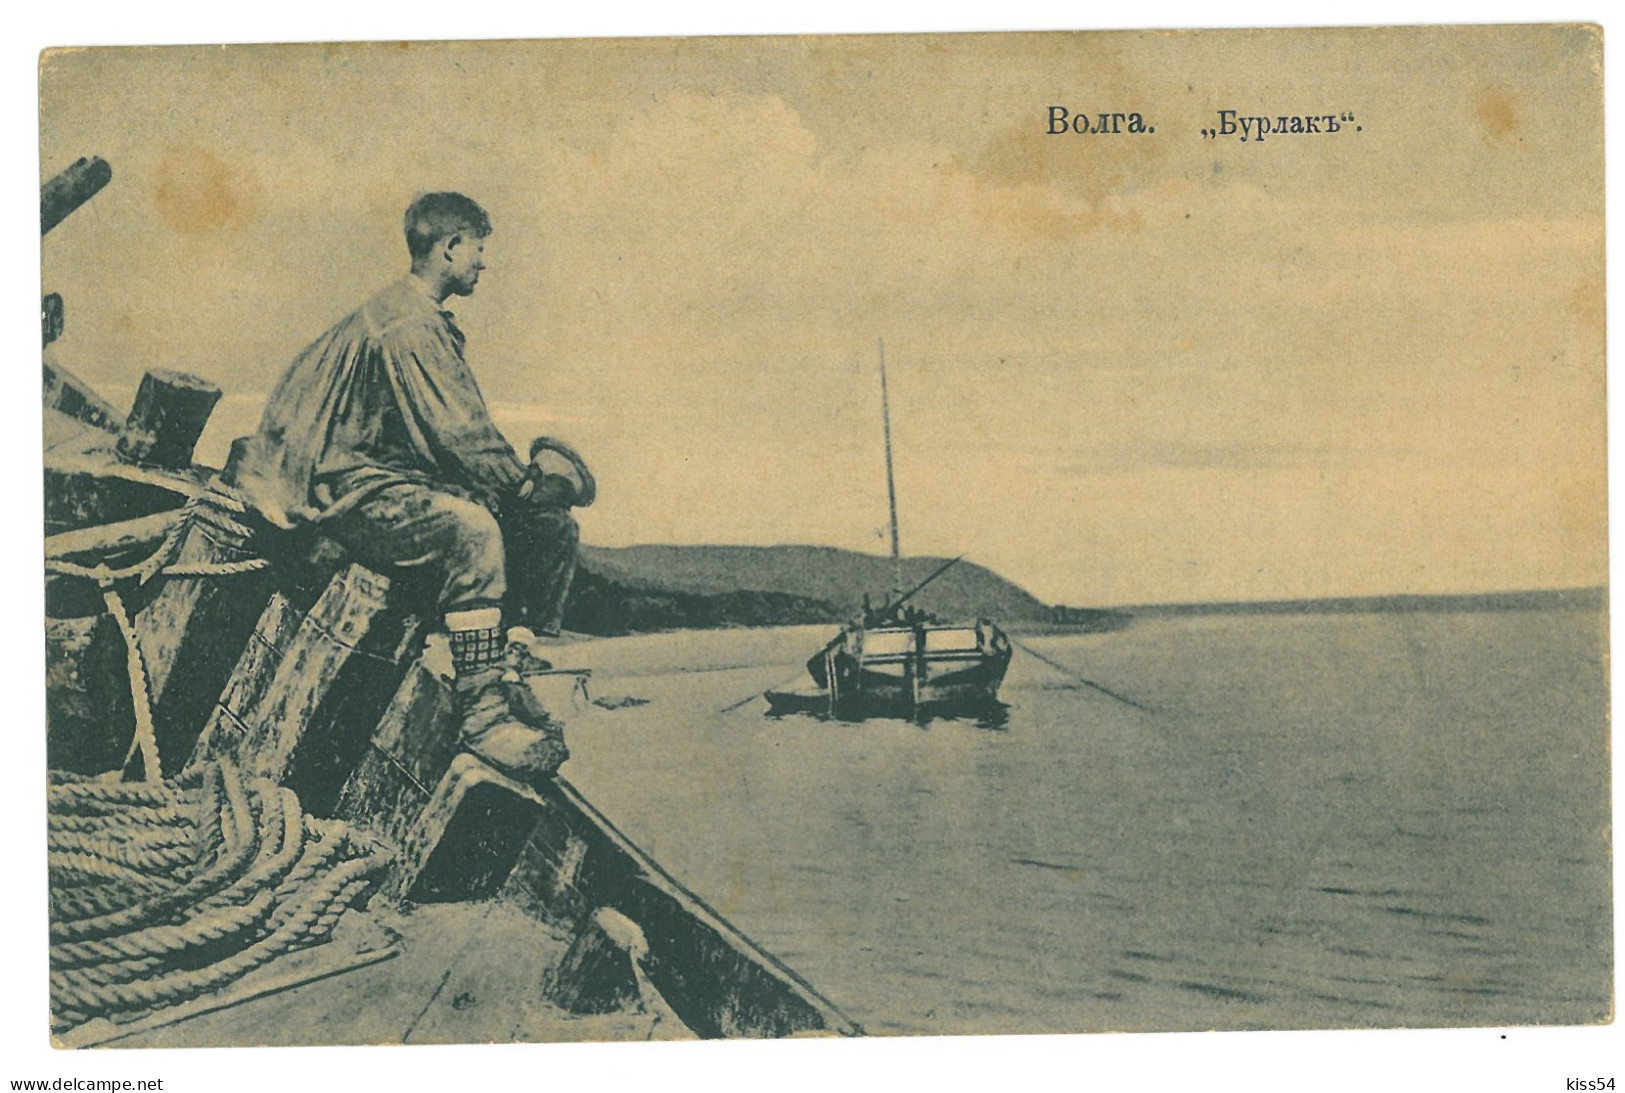 RUS 001 - 21977 WOLGA, Boats & Fisherman, Russia - Old Postcard - Unused - Russia